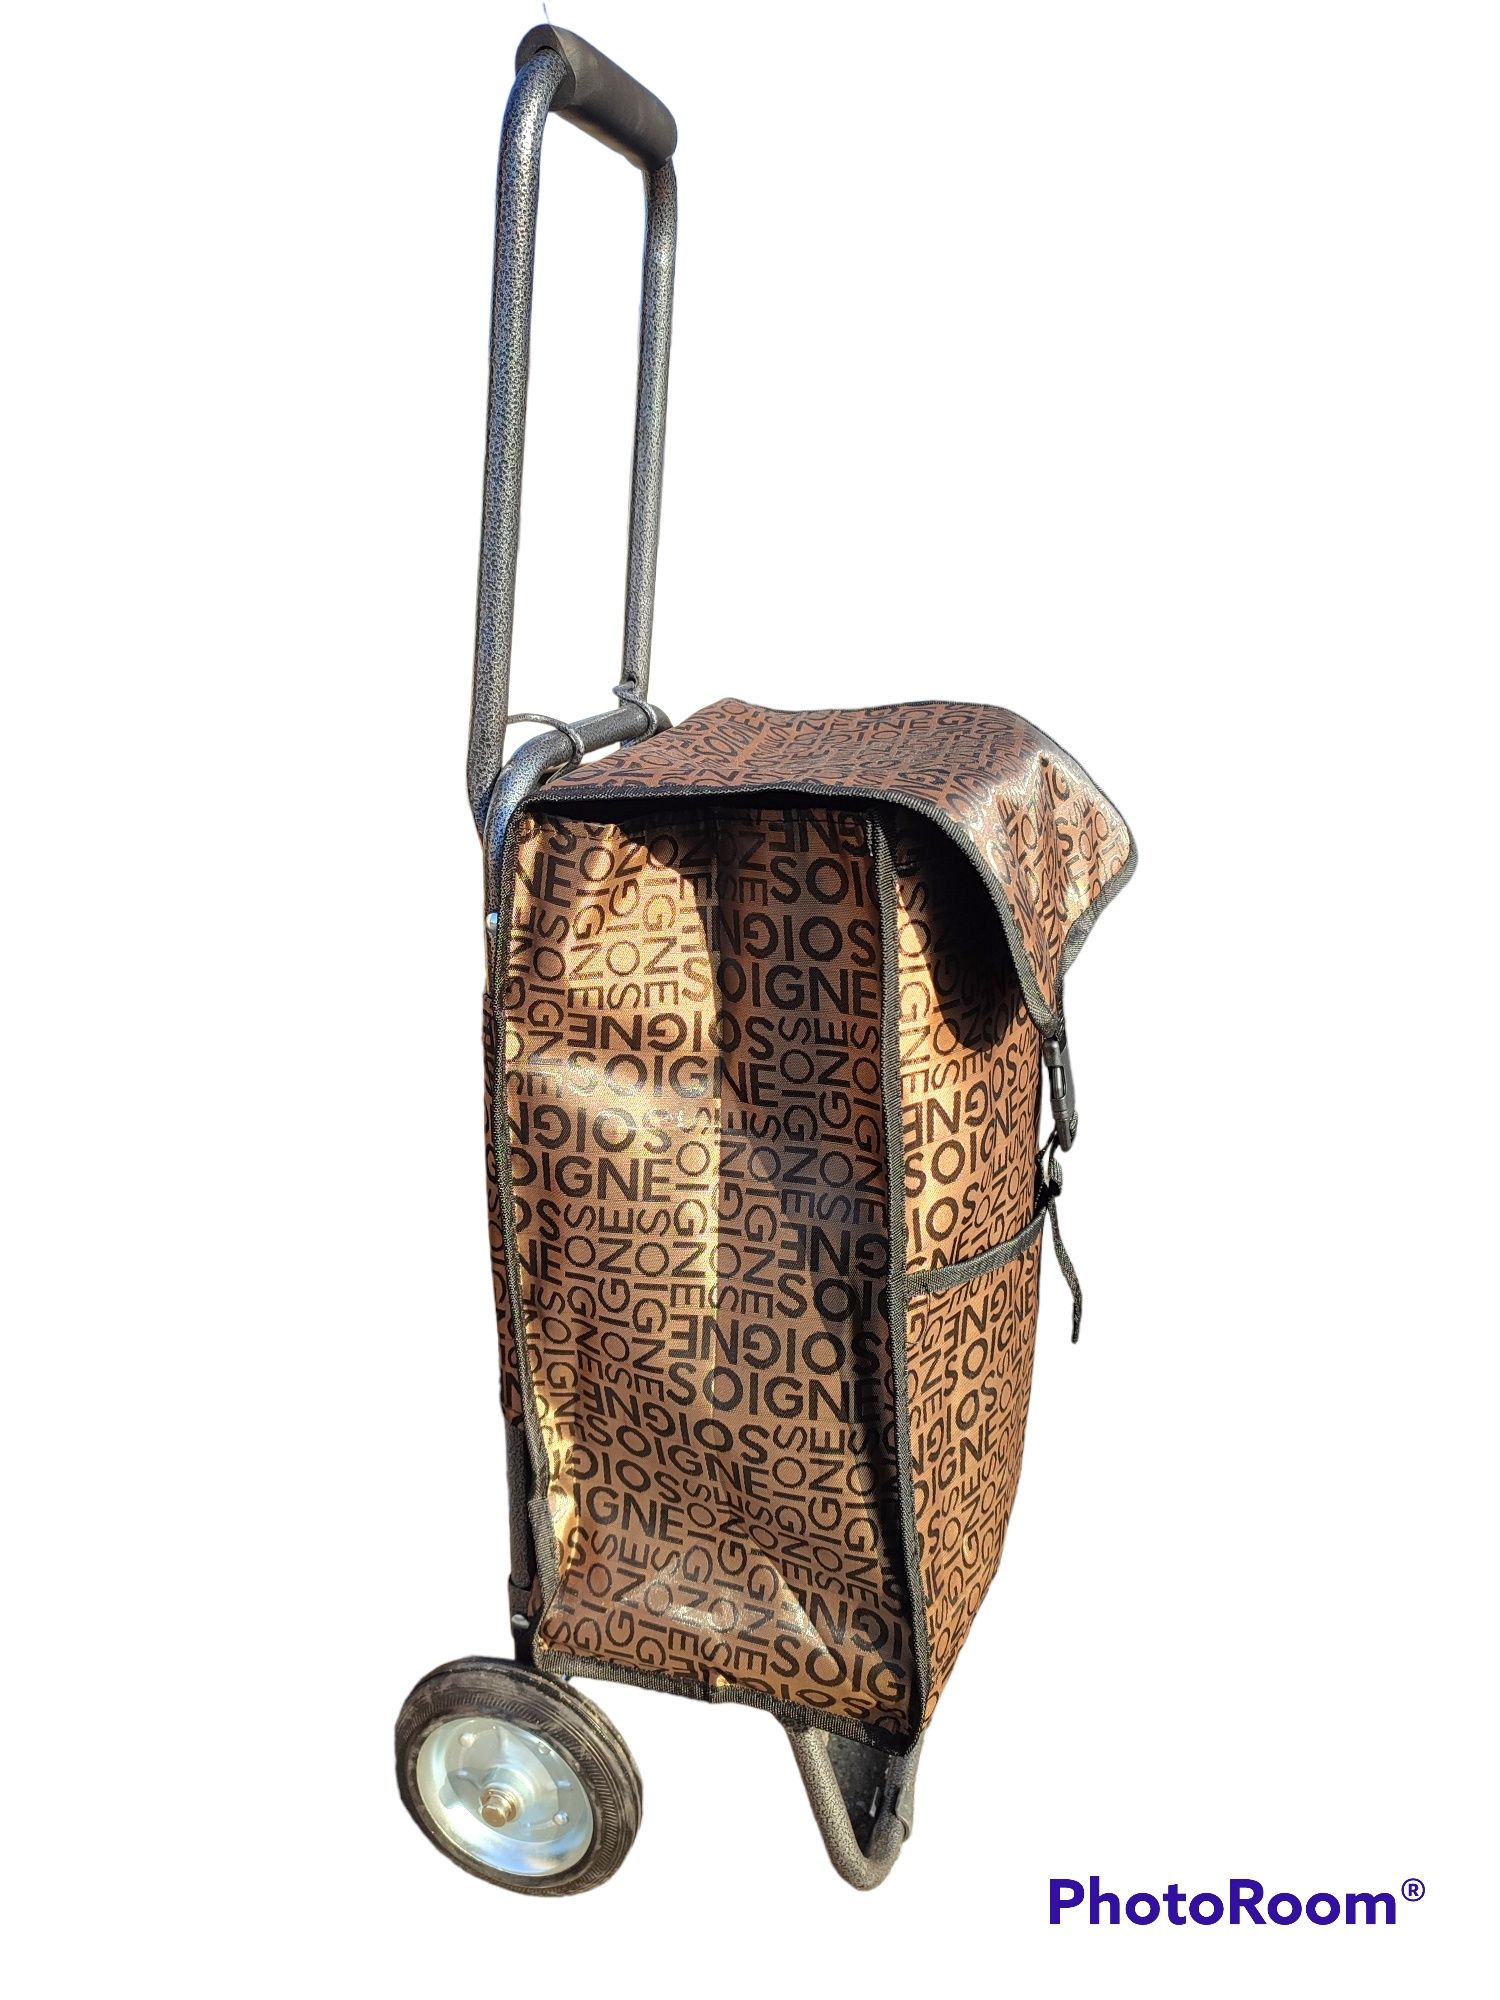 ОПТ.Тележка з сумкою,візок,кравчючка,господарська сумка на колесах